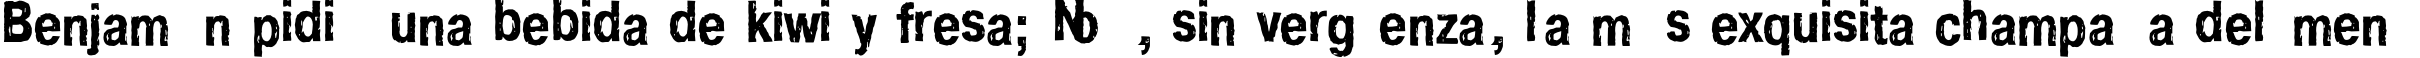 Пример написания шрифтом CrashC текста на испанском